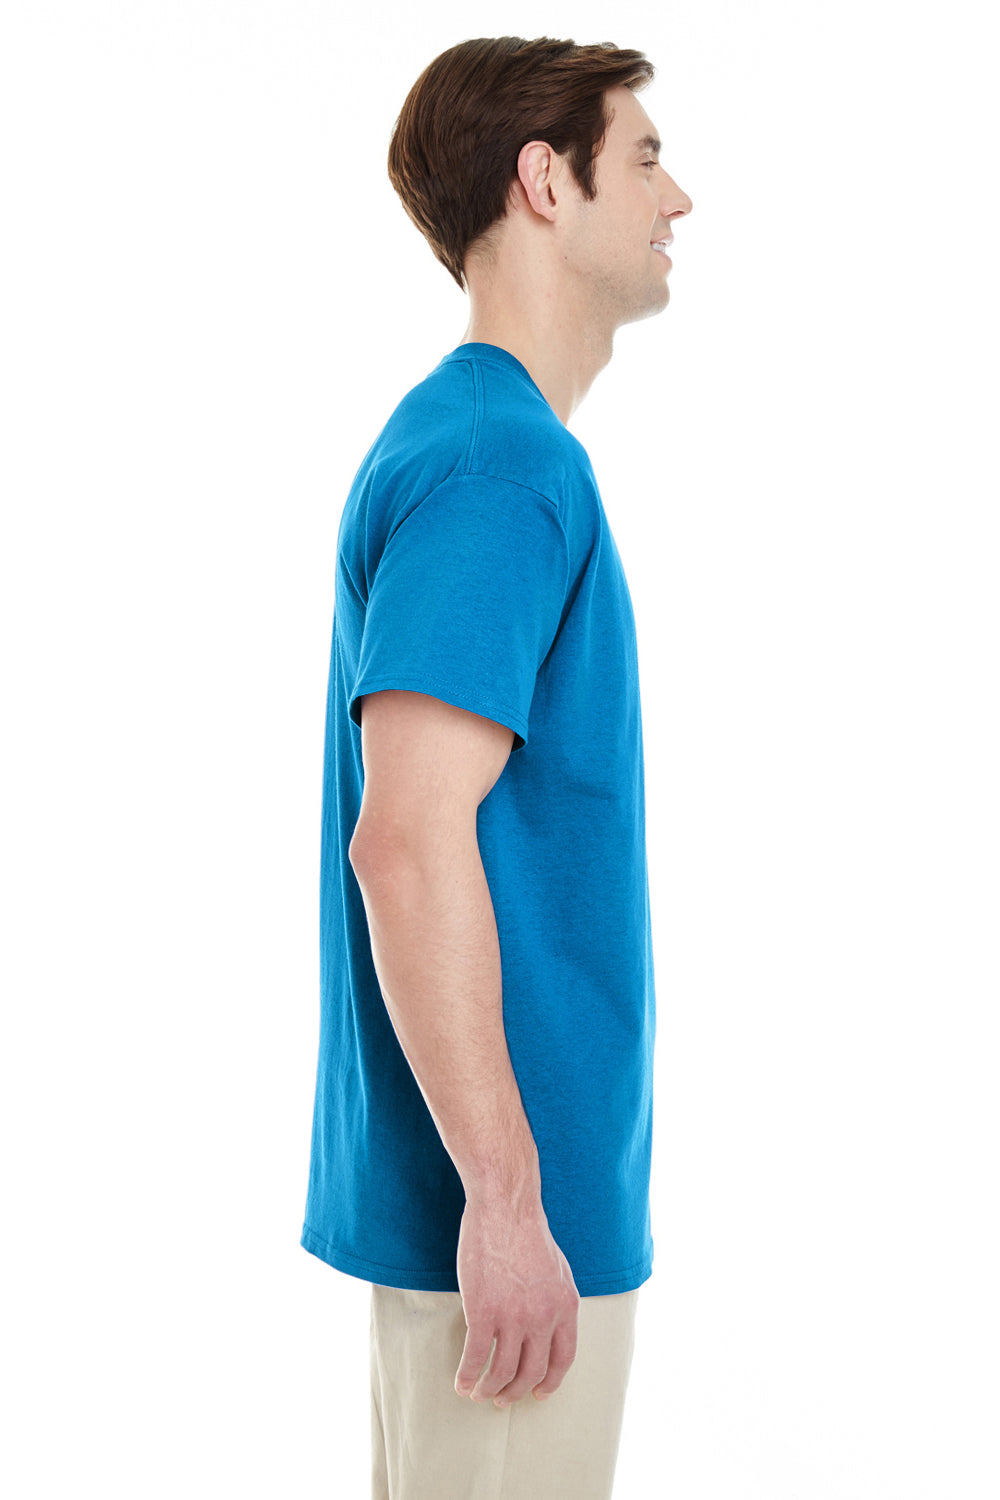 Gildan G530 Mens Short Sleeve Crewneck T-Shirt w/ Pocket Sapphire Blue Side